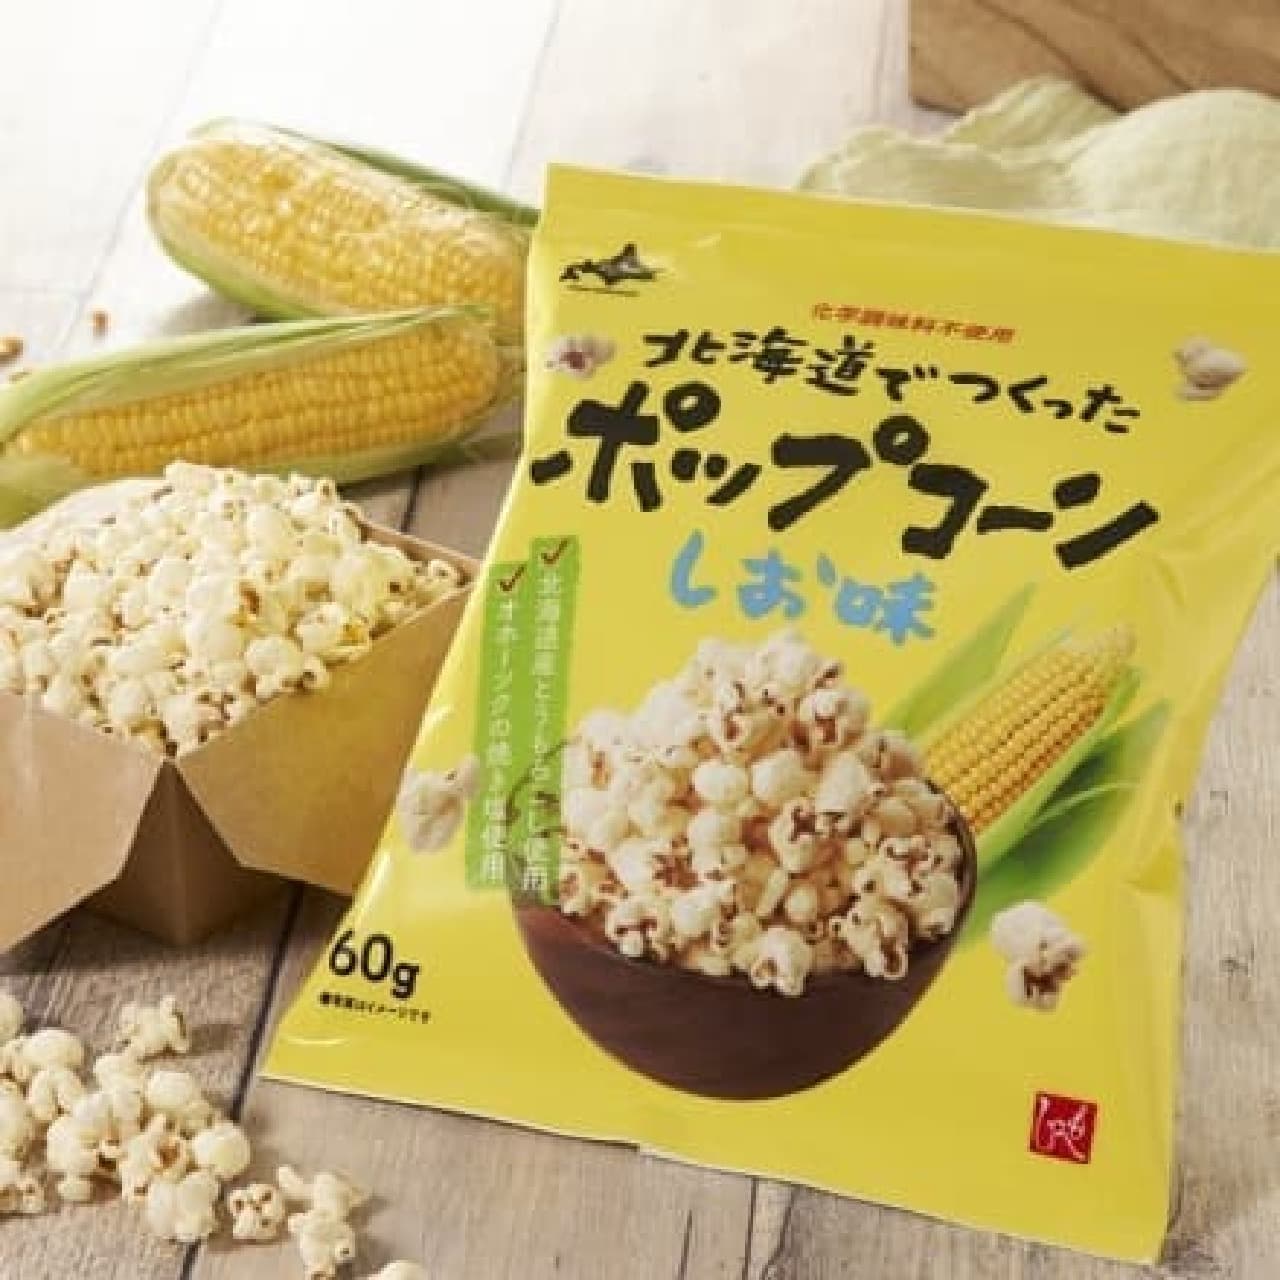 KALDI Coffee Farm "Moheji Hokkaido to Hokkaido Popcorn Salt Flavor"